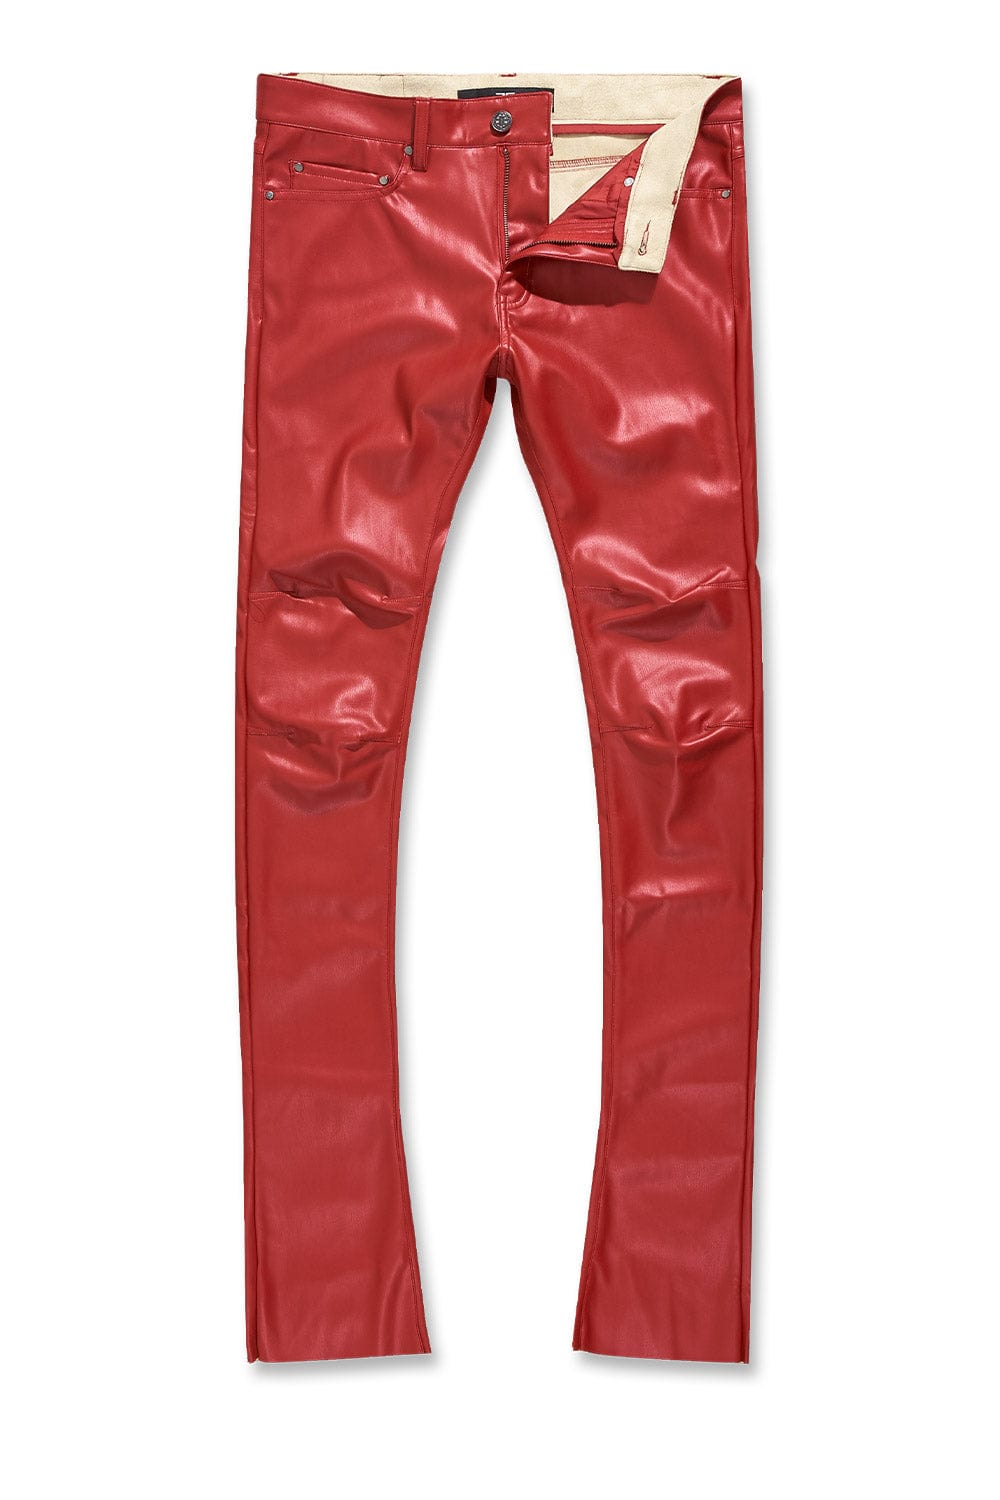 Jordan Craig Ross Stacked - Thriller Pants (Red)